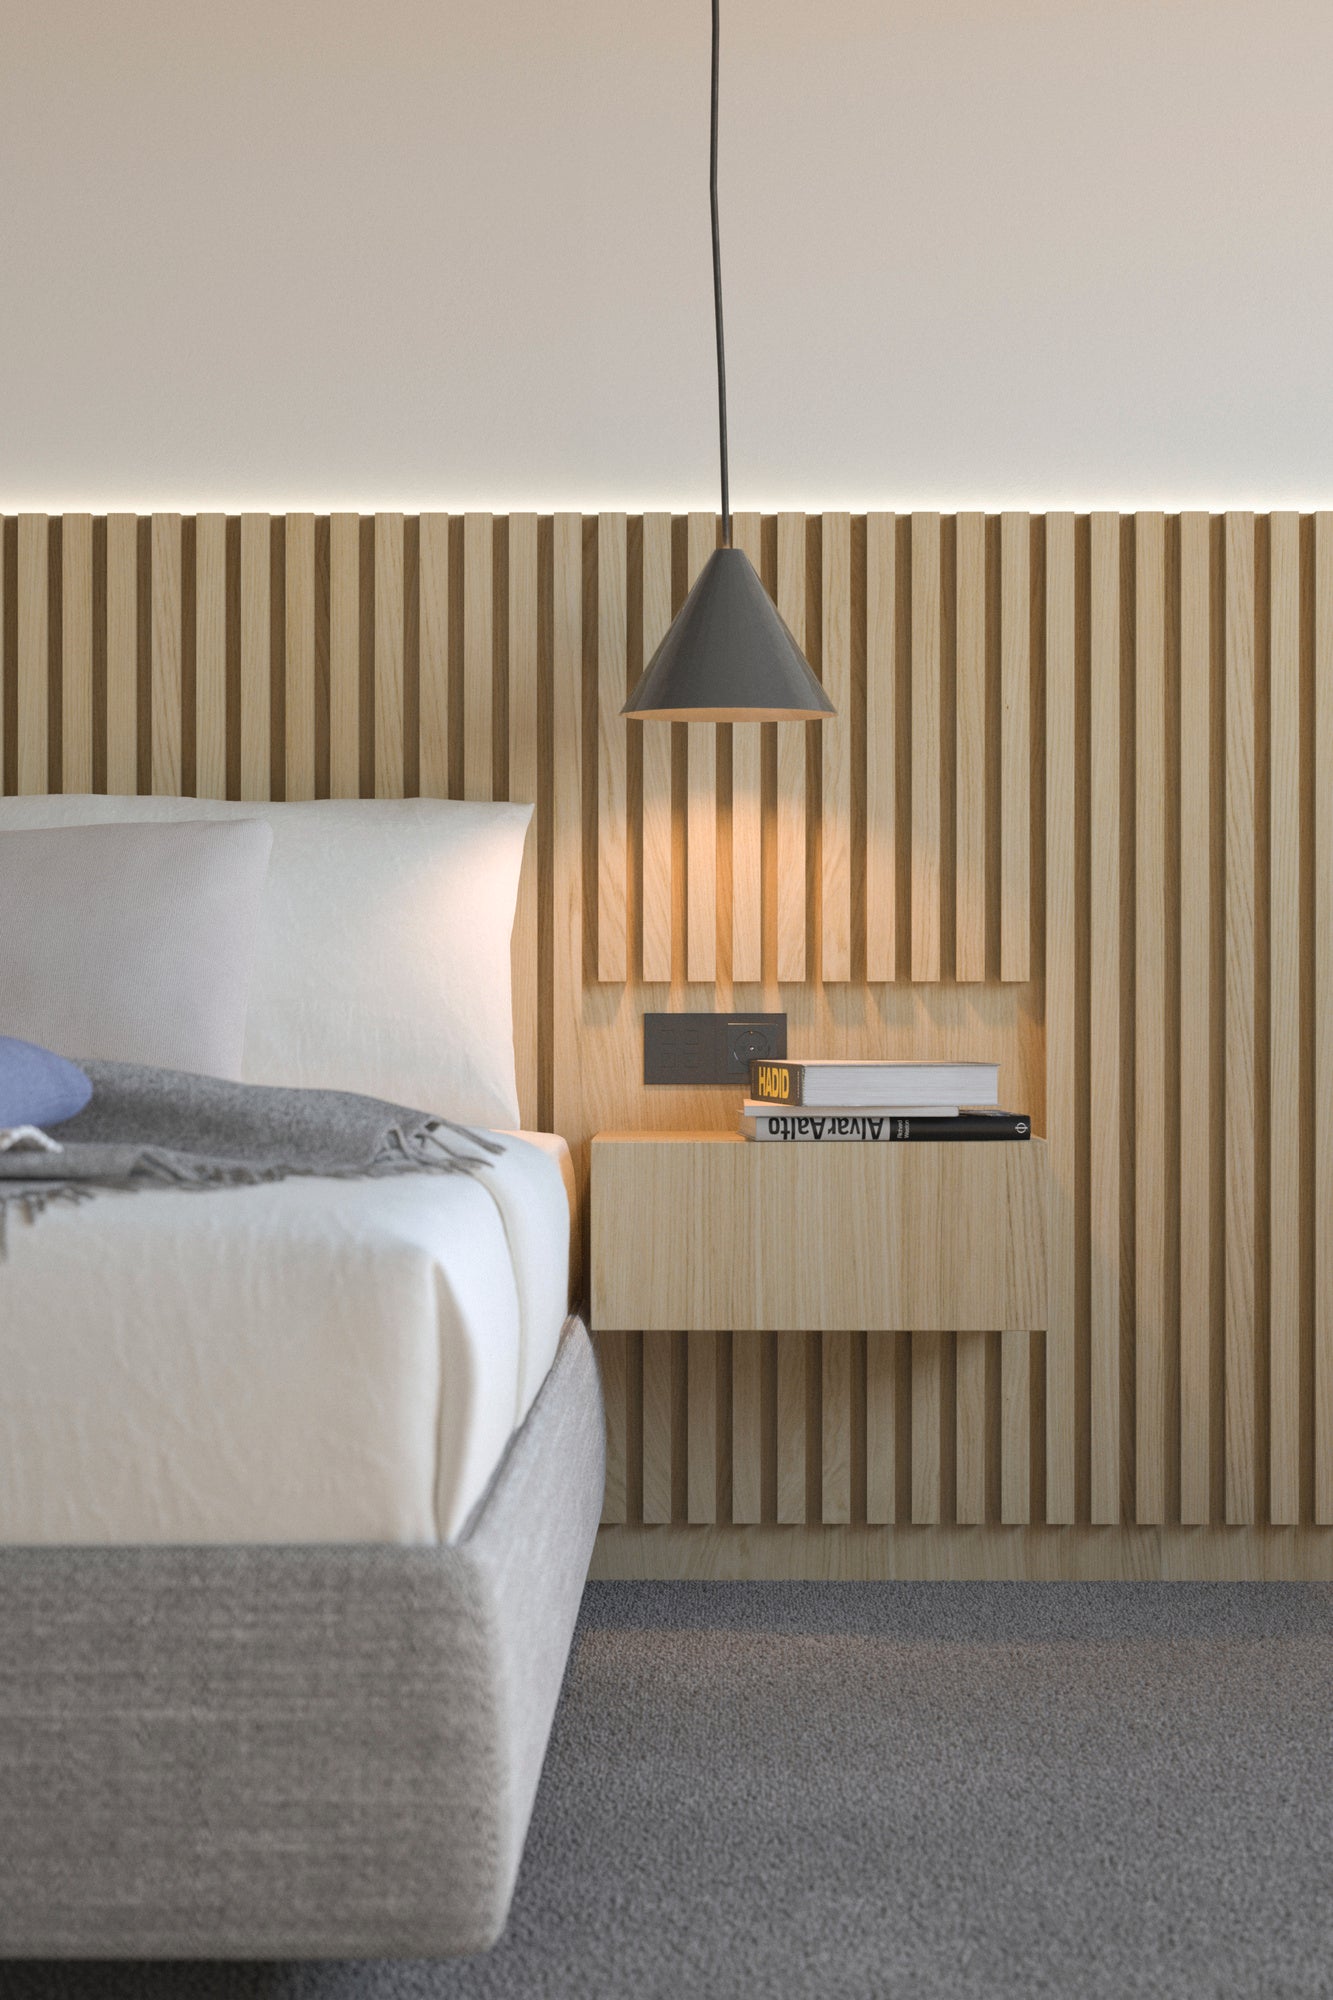 Astrata - Astrata slats - slats in bedroom - bedroom - wood in bedroom 